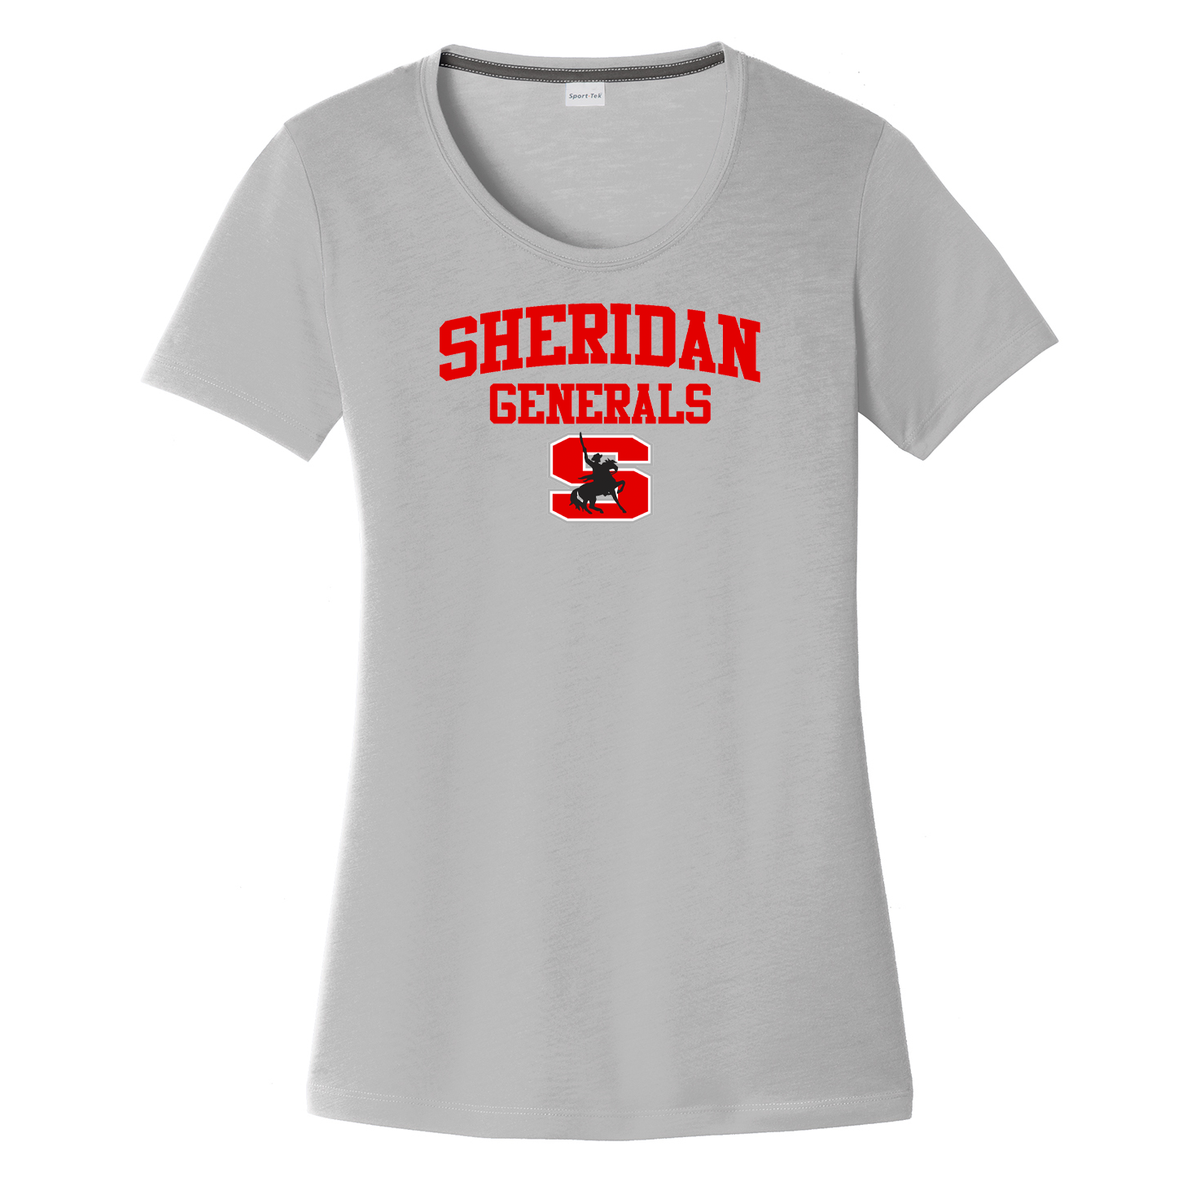 Sheridan Generals Women's CottonTouch Performance T-Shirt